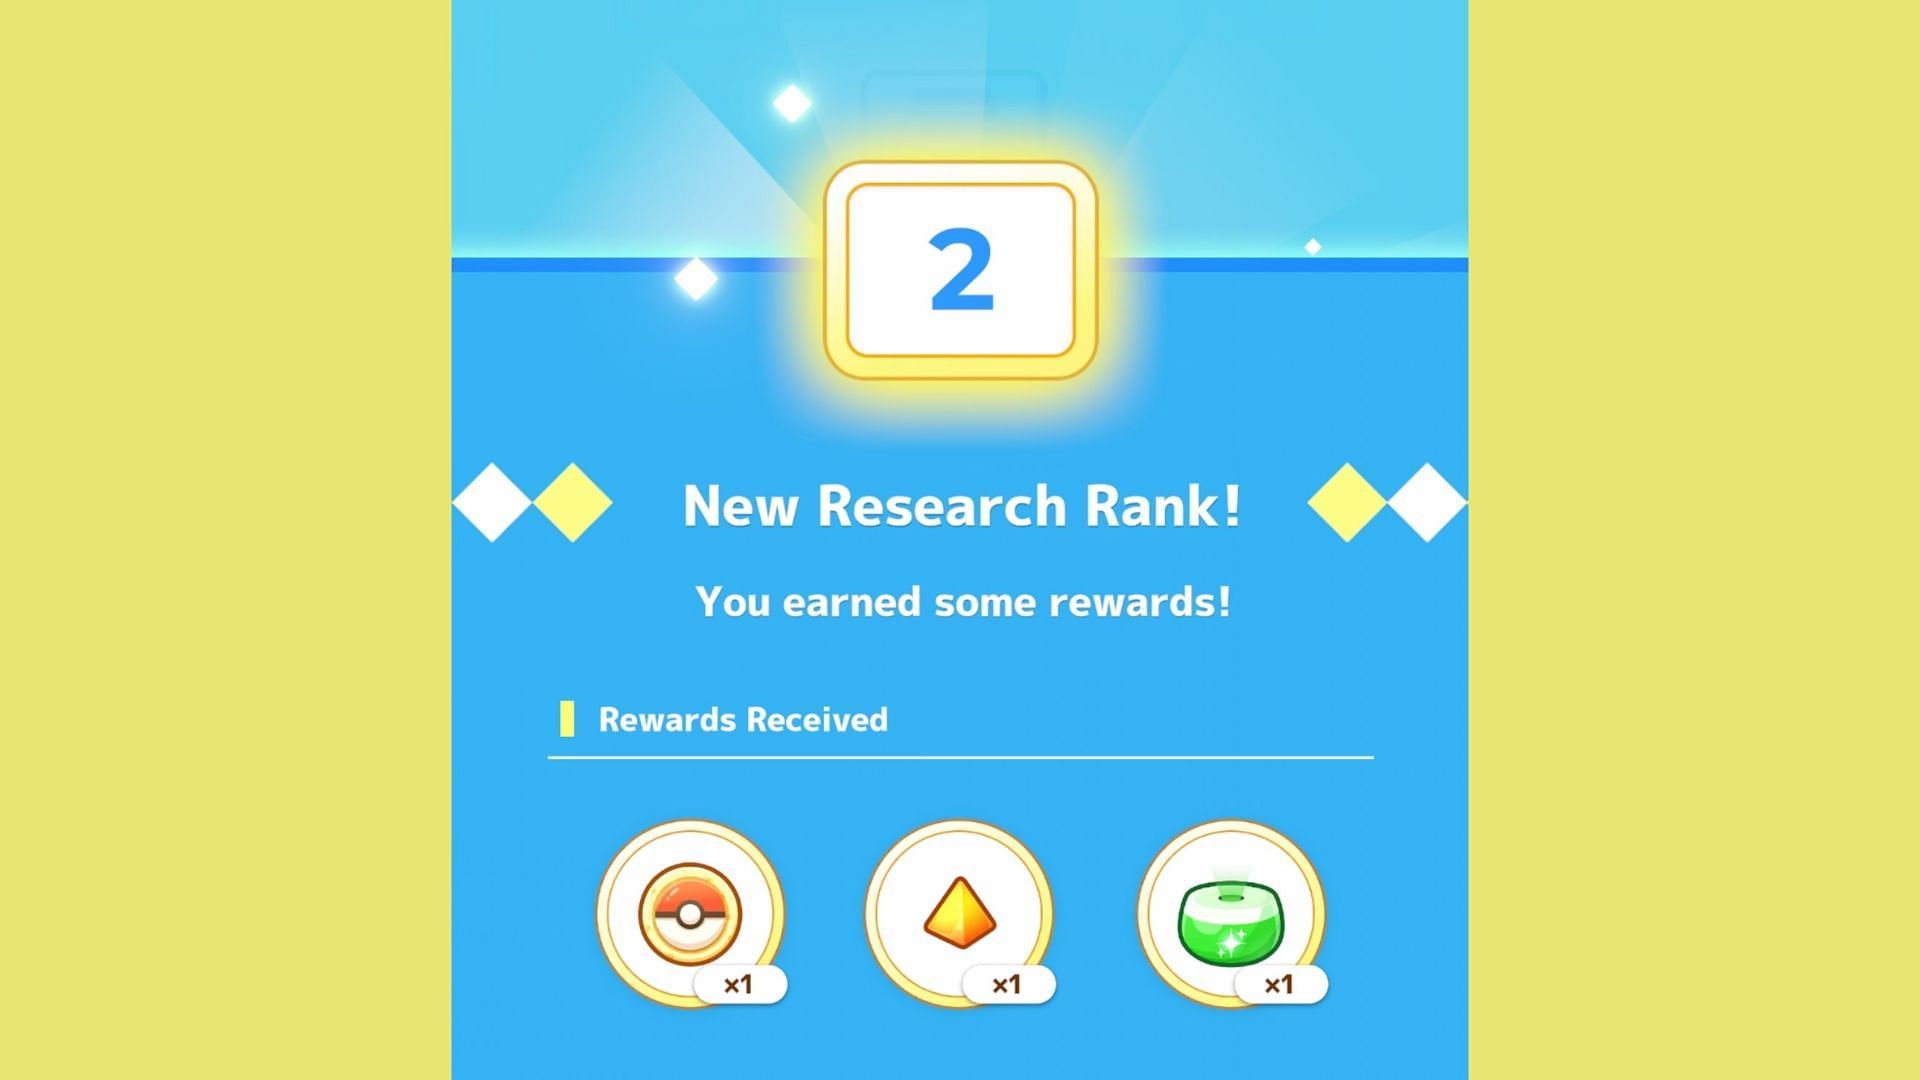 Make progress through Research (Image via The Pokemon Company)